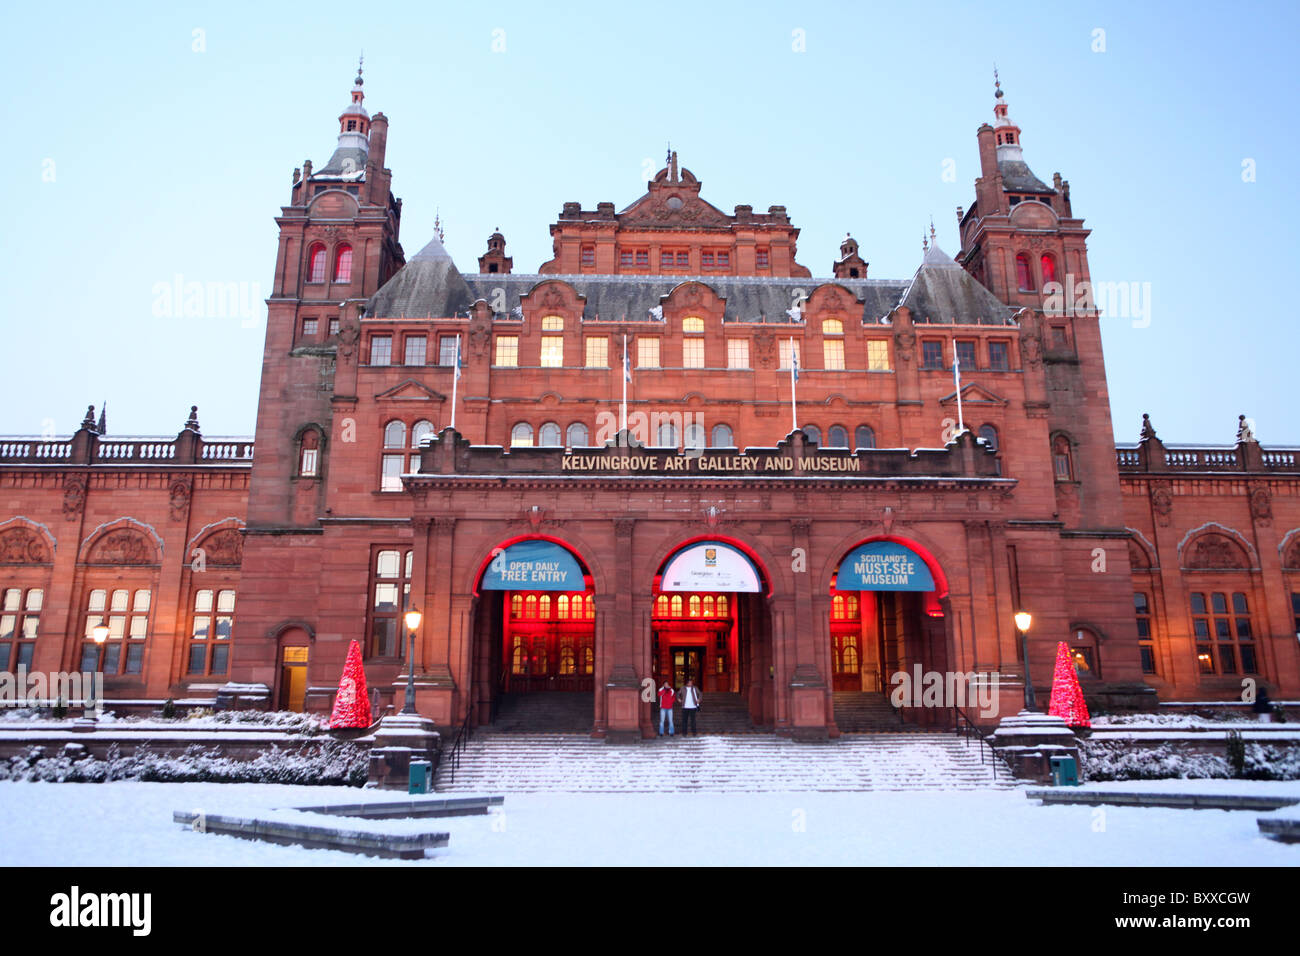 Ein Winter-Szene des Kelvingrove Art Gallery and Museum in Glasgow, Schottland. Stockfoto